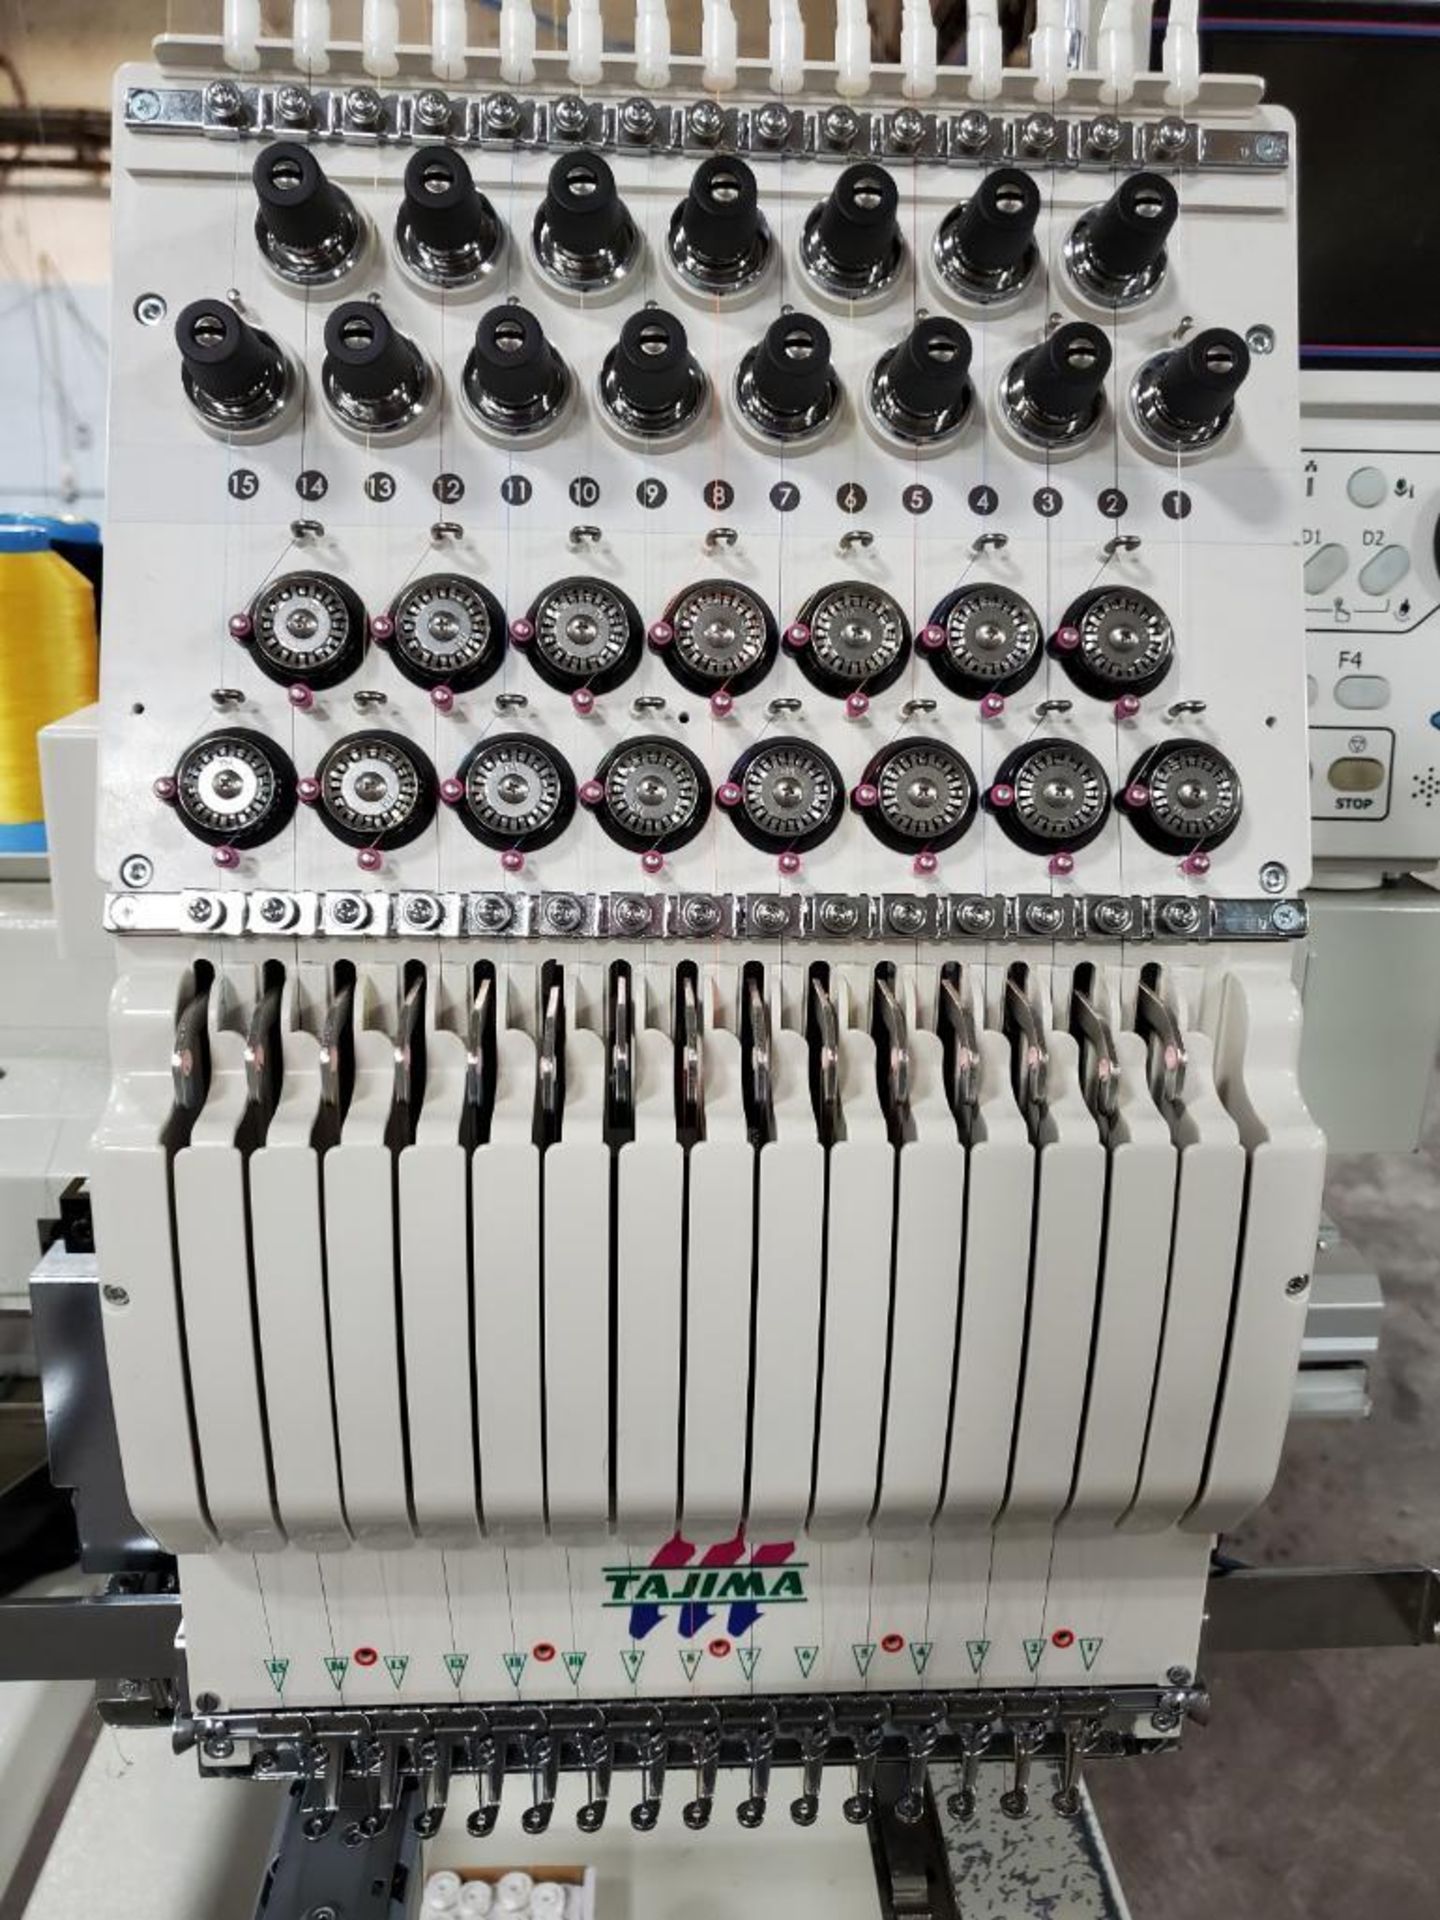 2017 TOKIA TAJIMA ELECTRONIC AUTOMATIC SEWING EMBROIDERY MACHINE, MODEL TMBP-S1501C, 15-THREAD SPOOL - Image 4 of 9